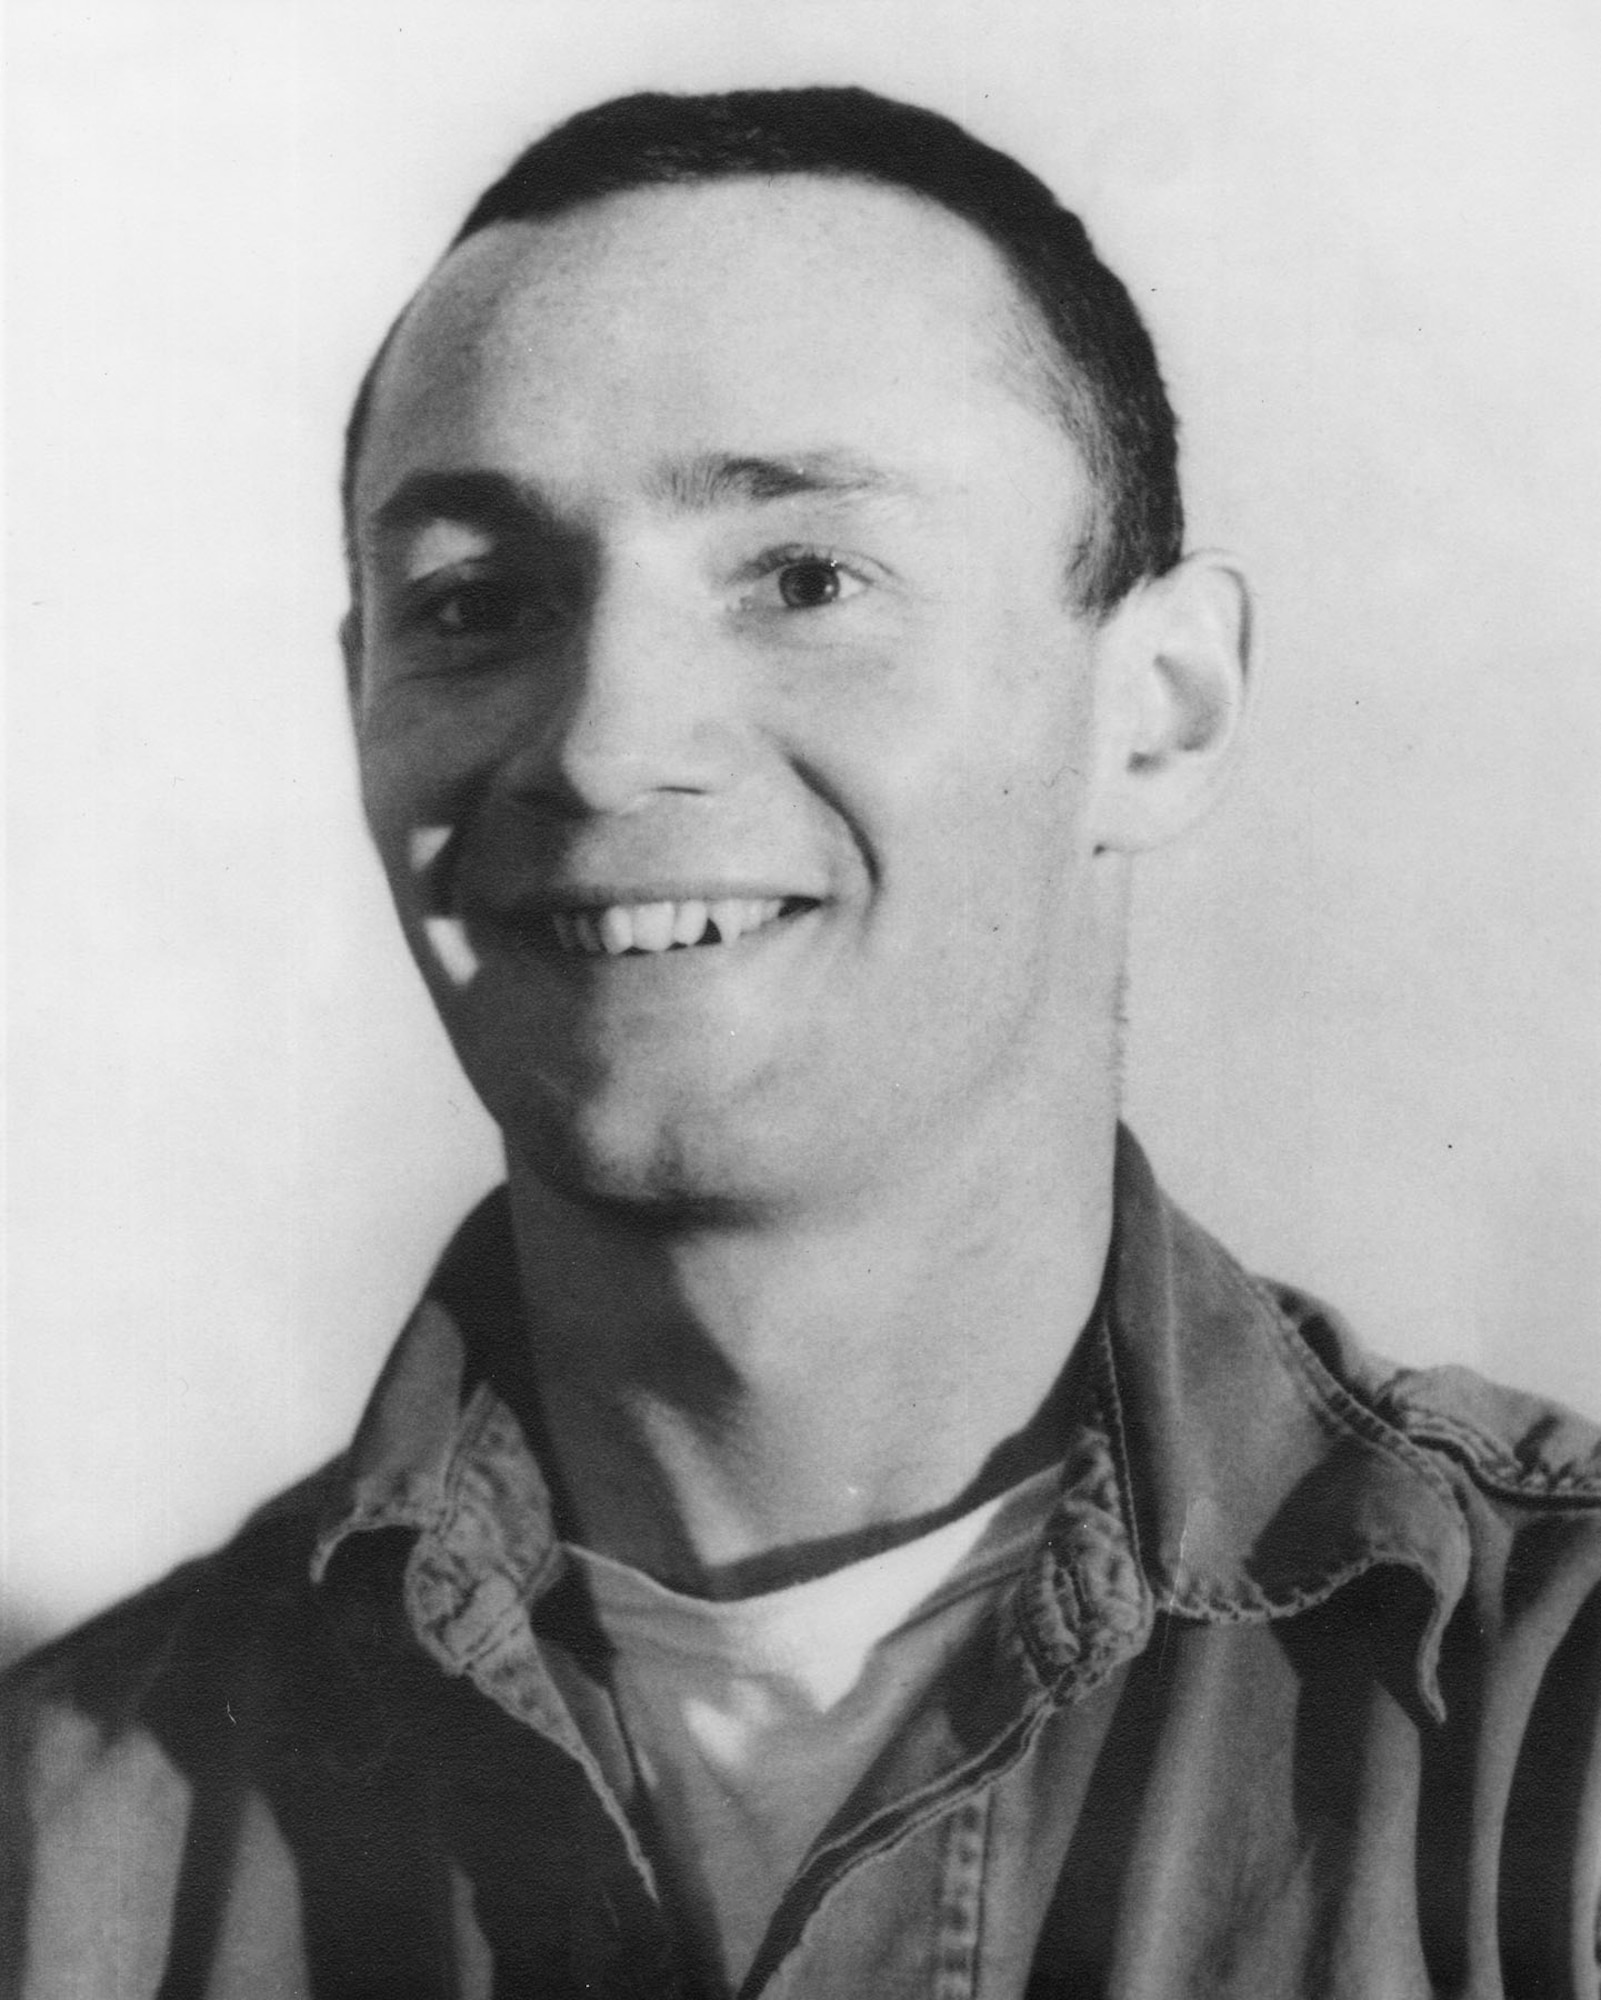 Capt. Robert Trier. (U.S. Air Force photo)